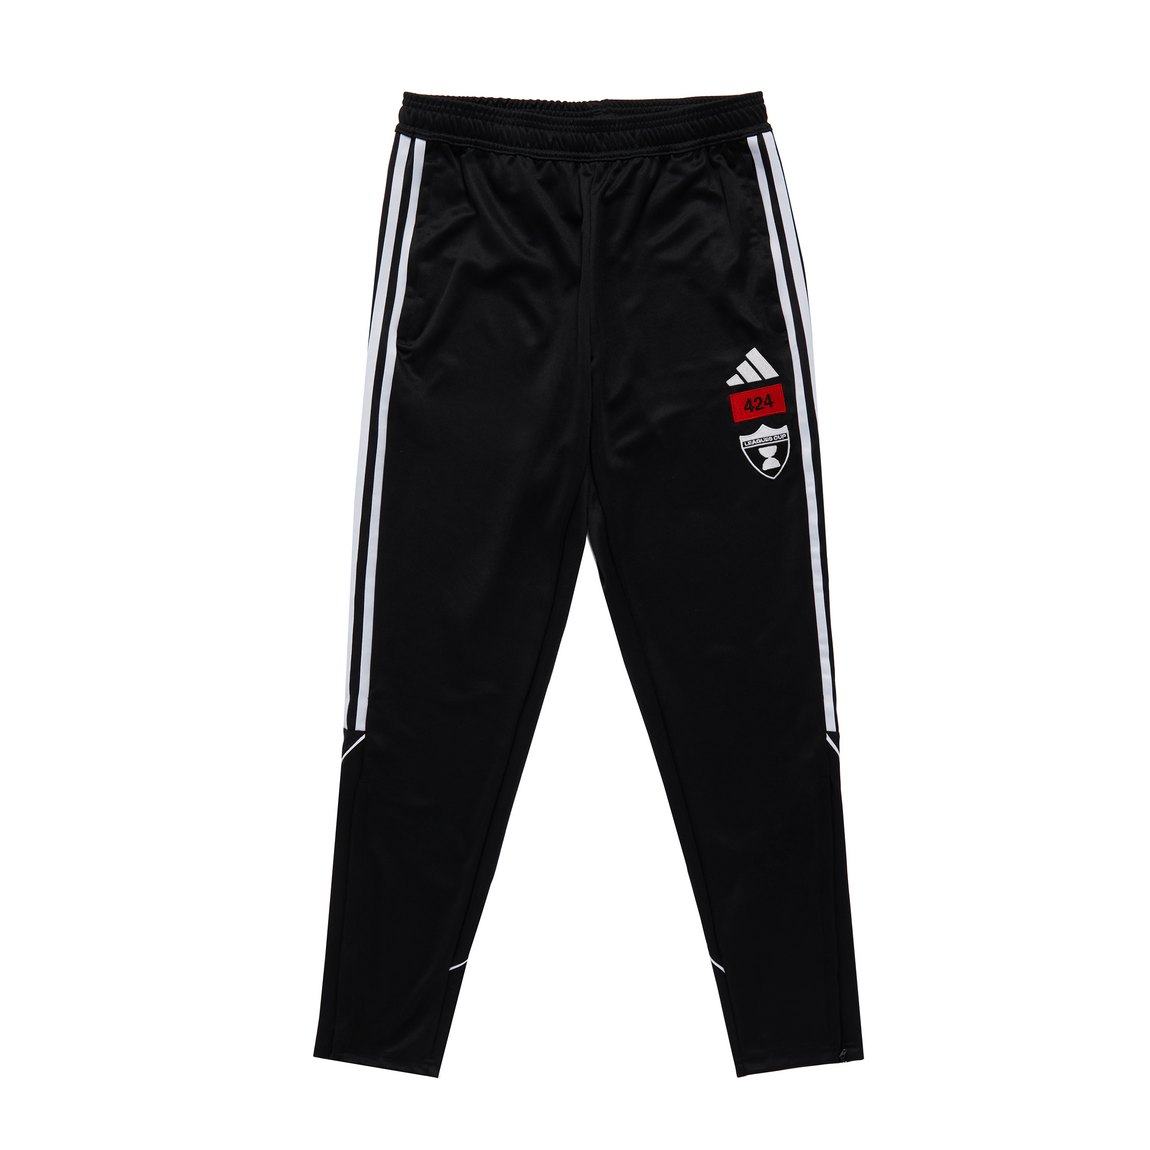 Adidas x 424 MLS Tiro23 League Pant (Black) - Adidas x 424 MLS Tiro23 League Pant (Black) - 